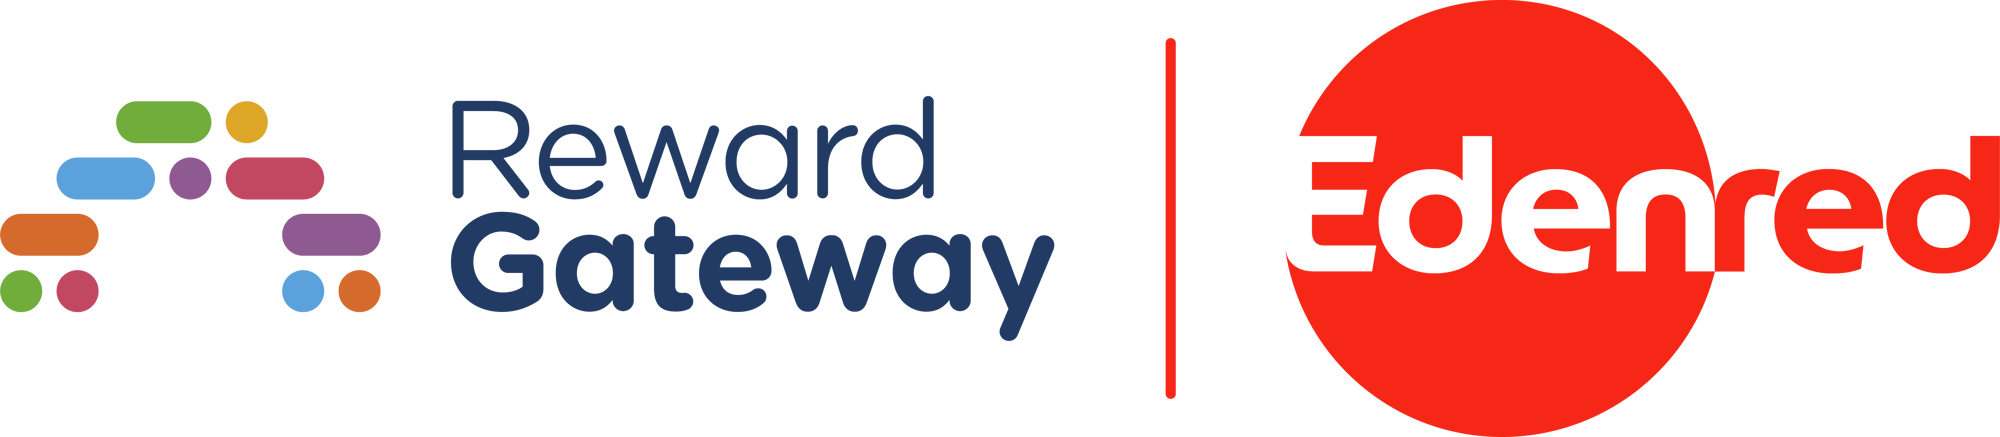 Edenred_RewardGateway_Logo